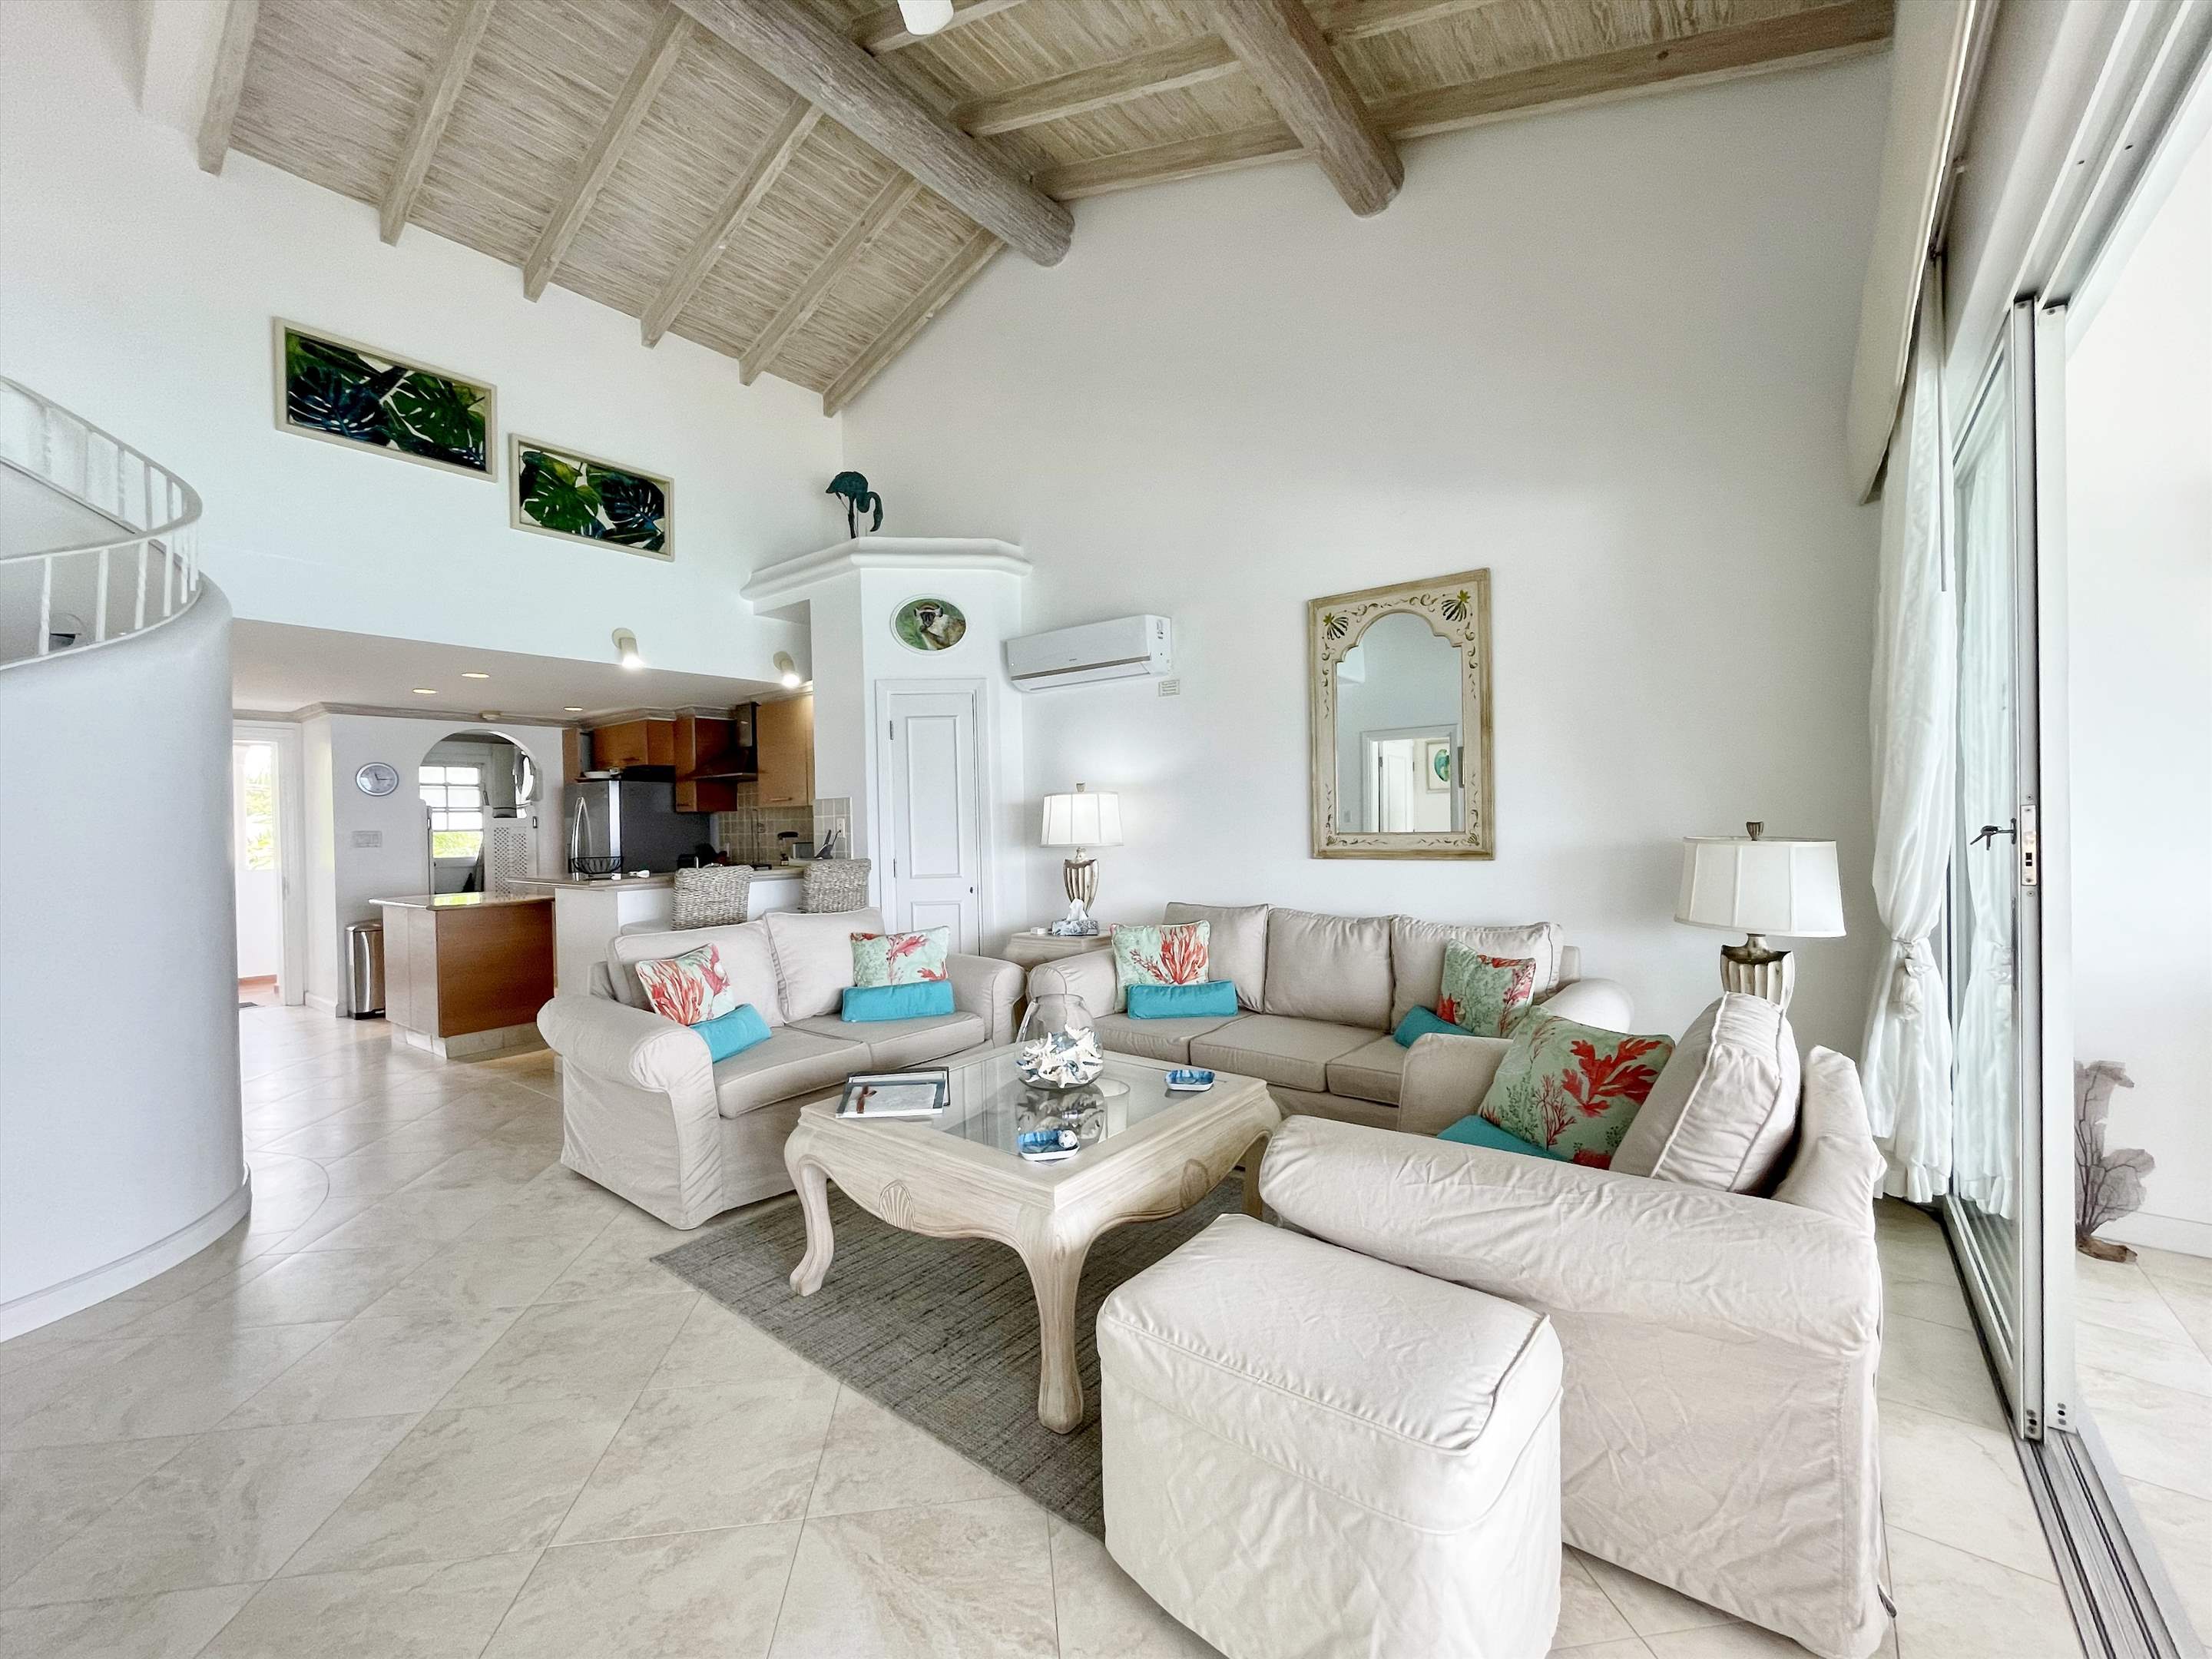 Villas on the Beach 403, 3 bedroom, 3 bedroom apartment in St. James & West Coast, Barbados Photo #4